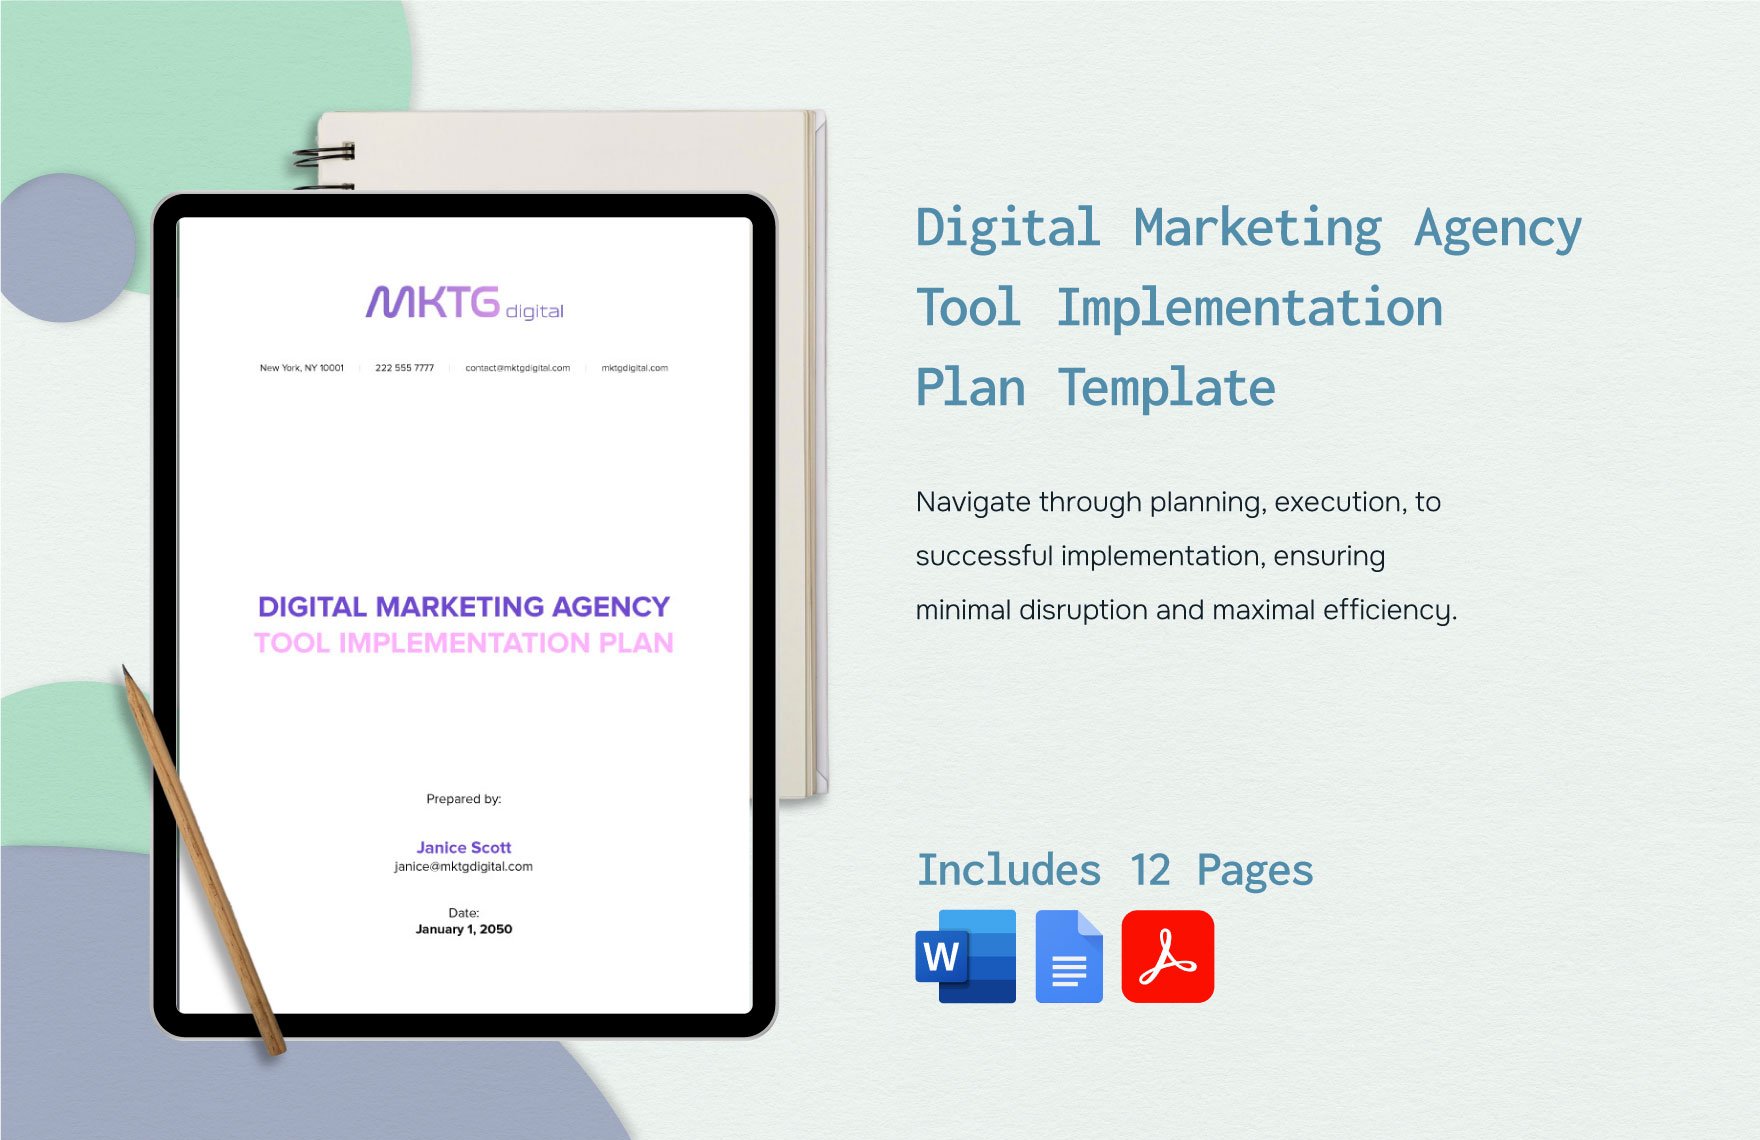 Digital Marketing Agency Tool Implementation Plan Template